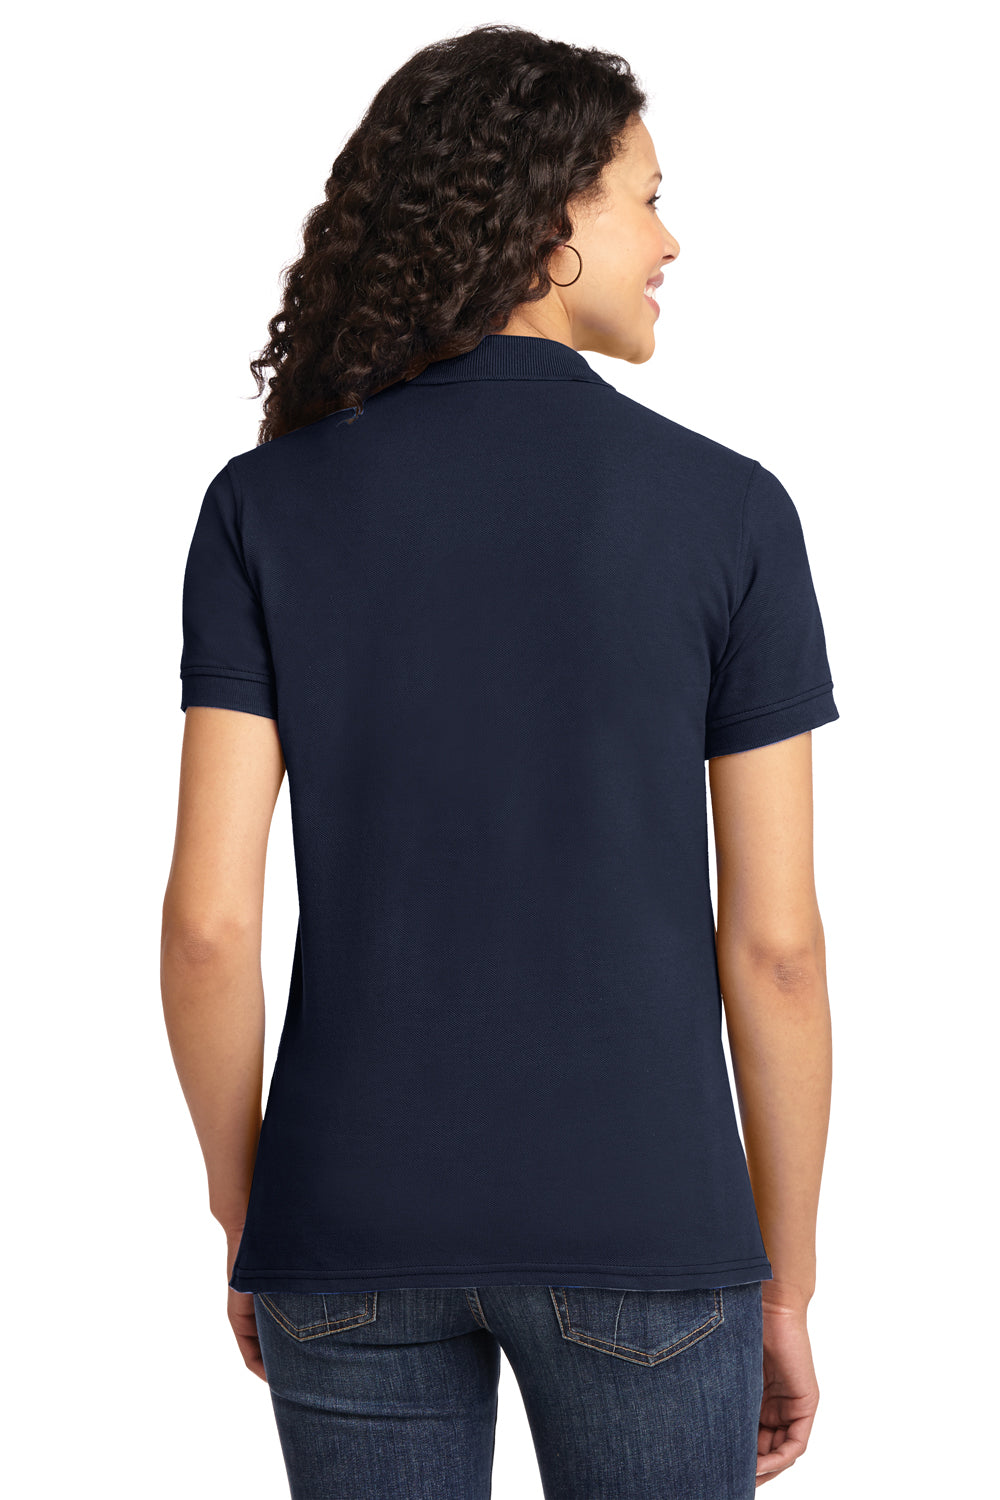 Port & Company LKP155 Womens Core Stain Resistant Short Sleeve Polo Shirt Navy Blue Back